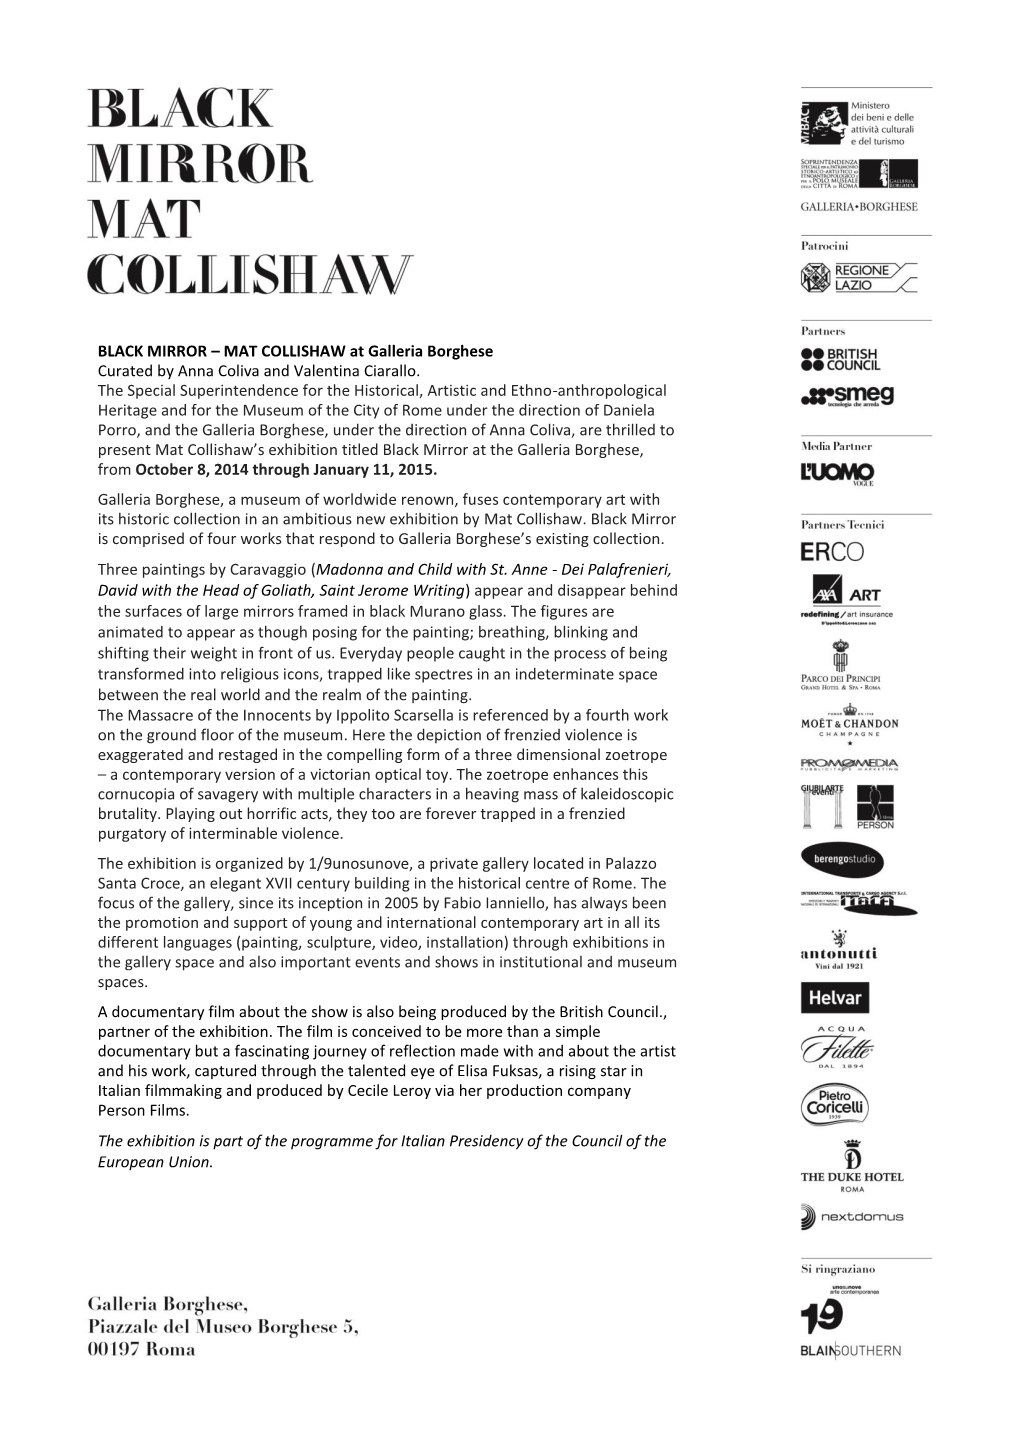 MAT COLLISHAW at Galleria Borghese Curated by Anna Coliva and Valentina Ciarallo